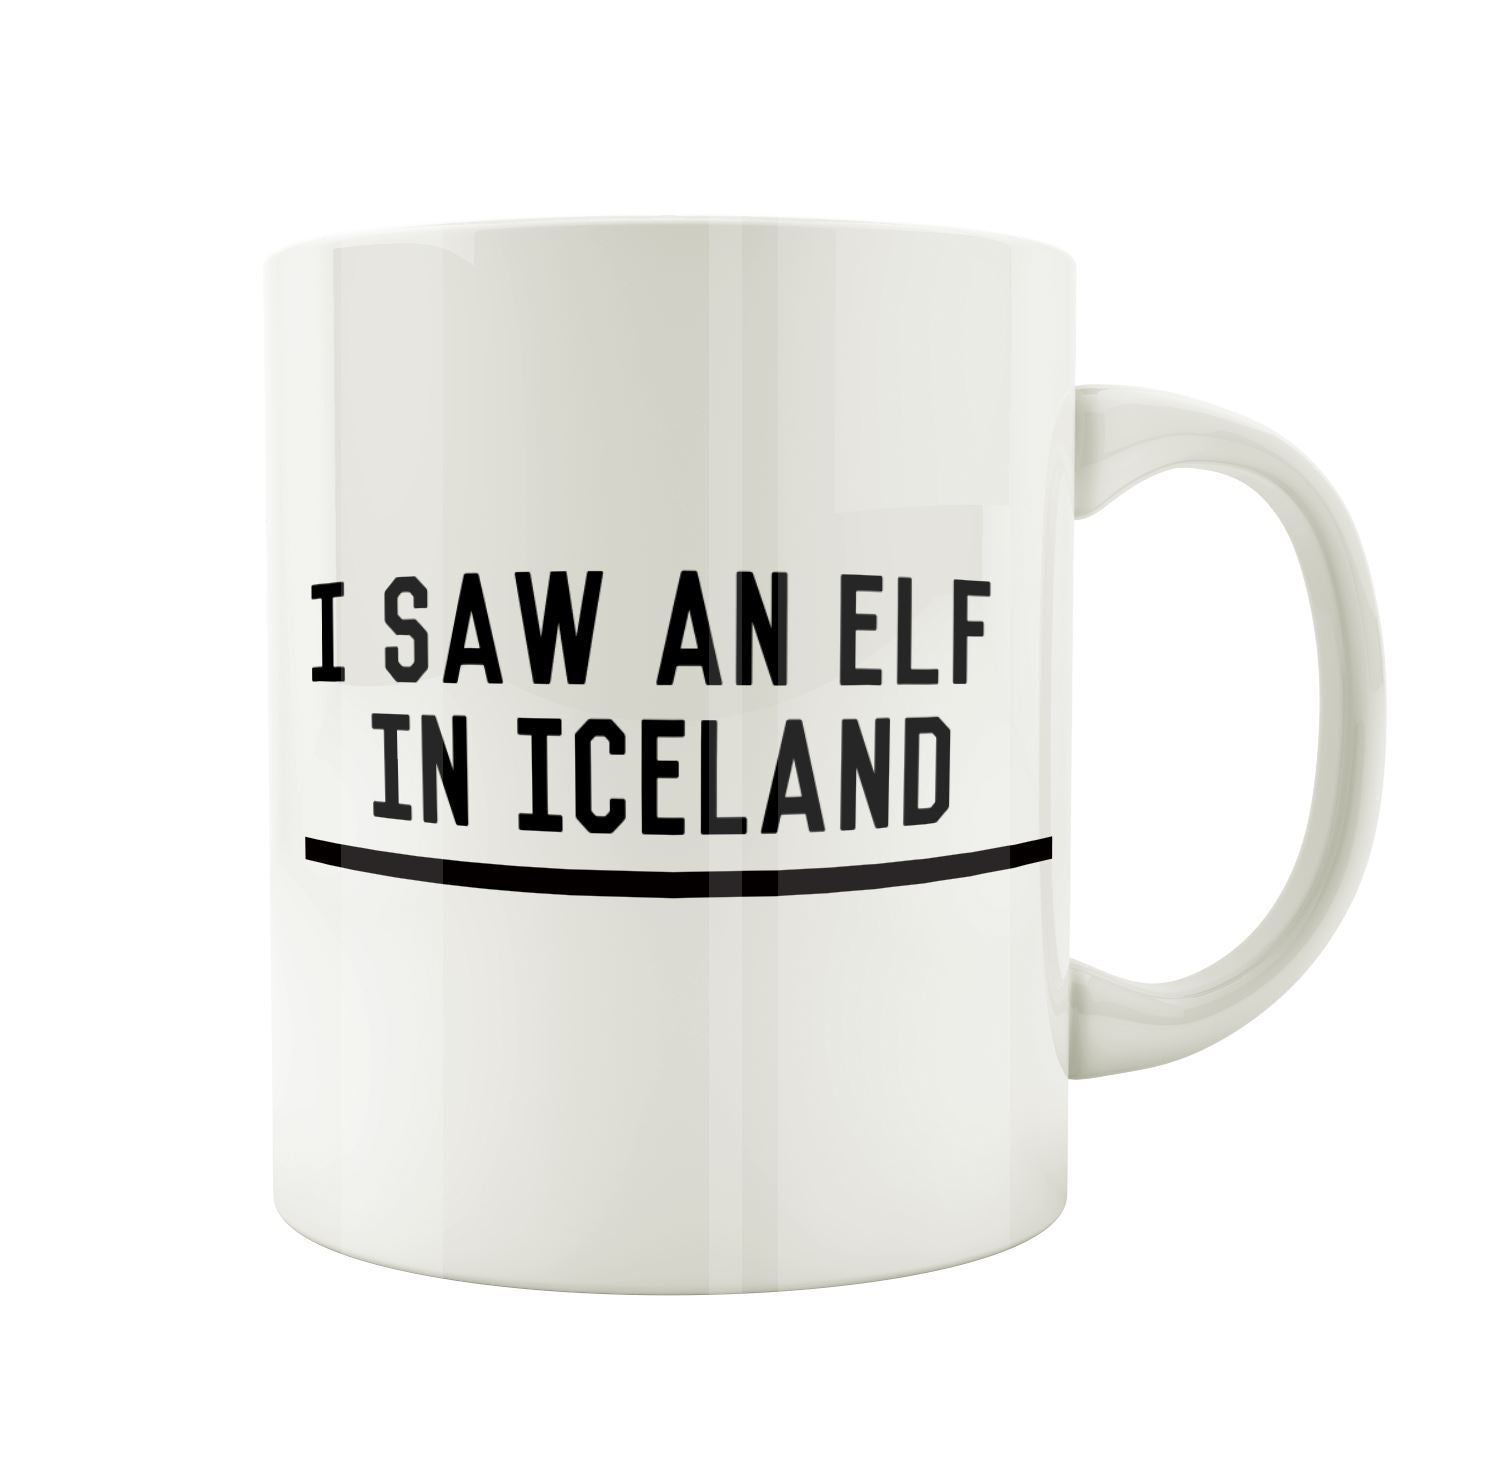 I saw an elf in iceland